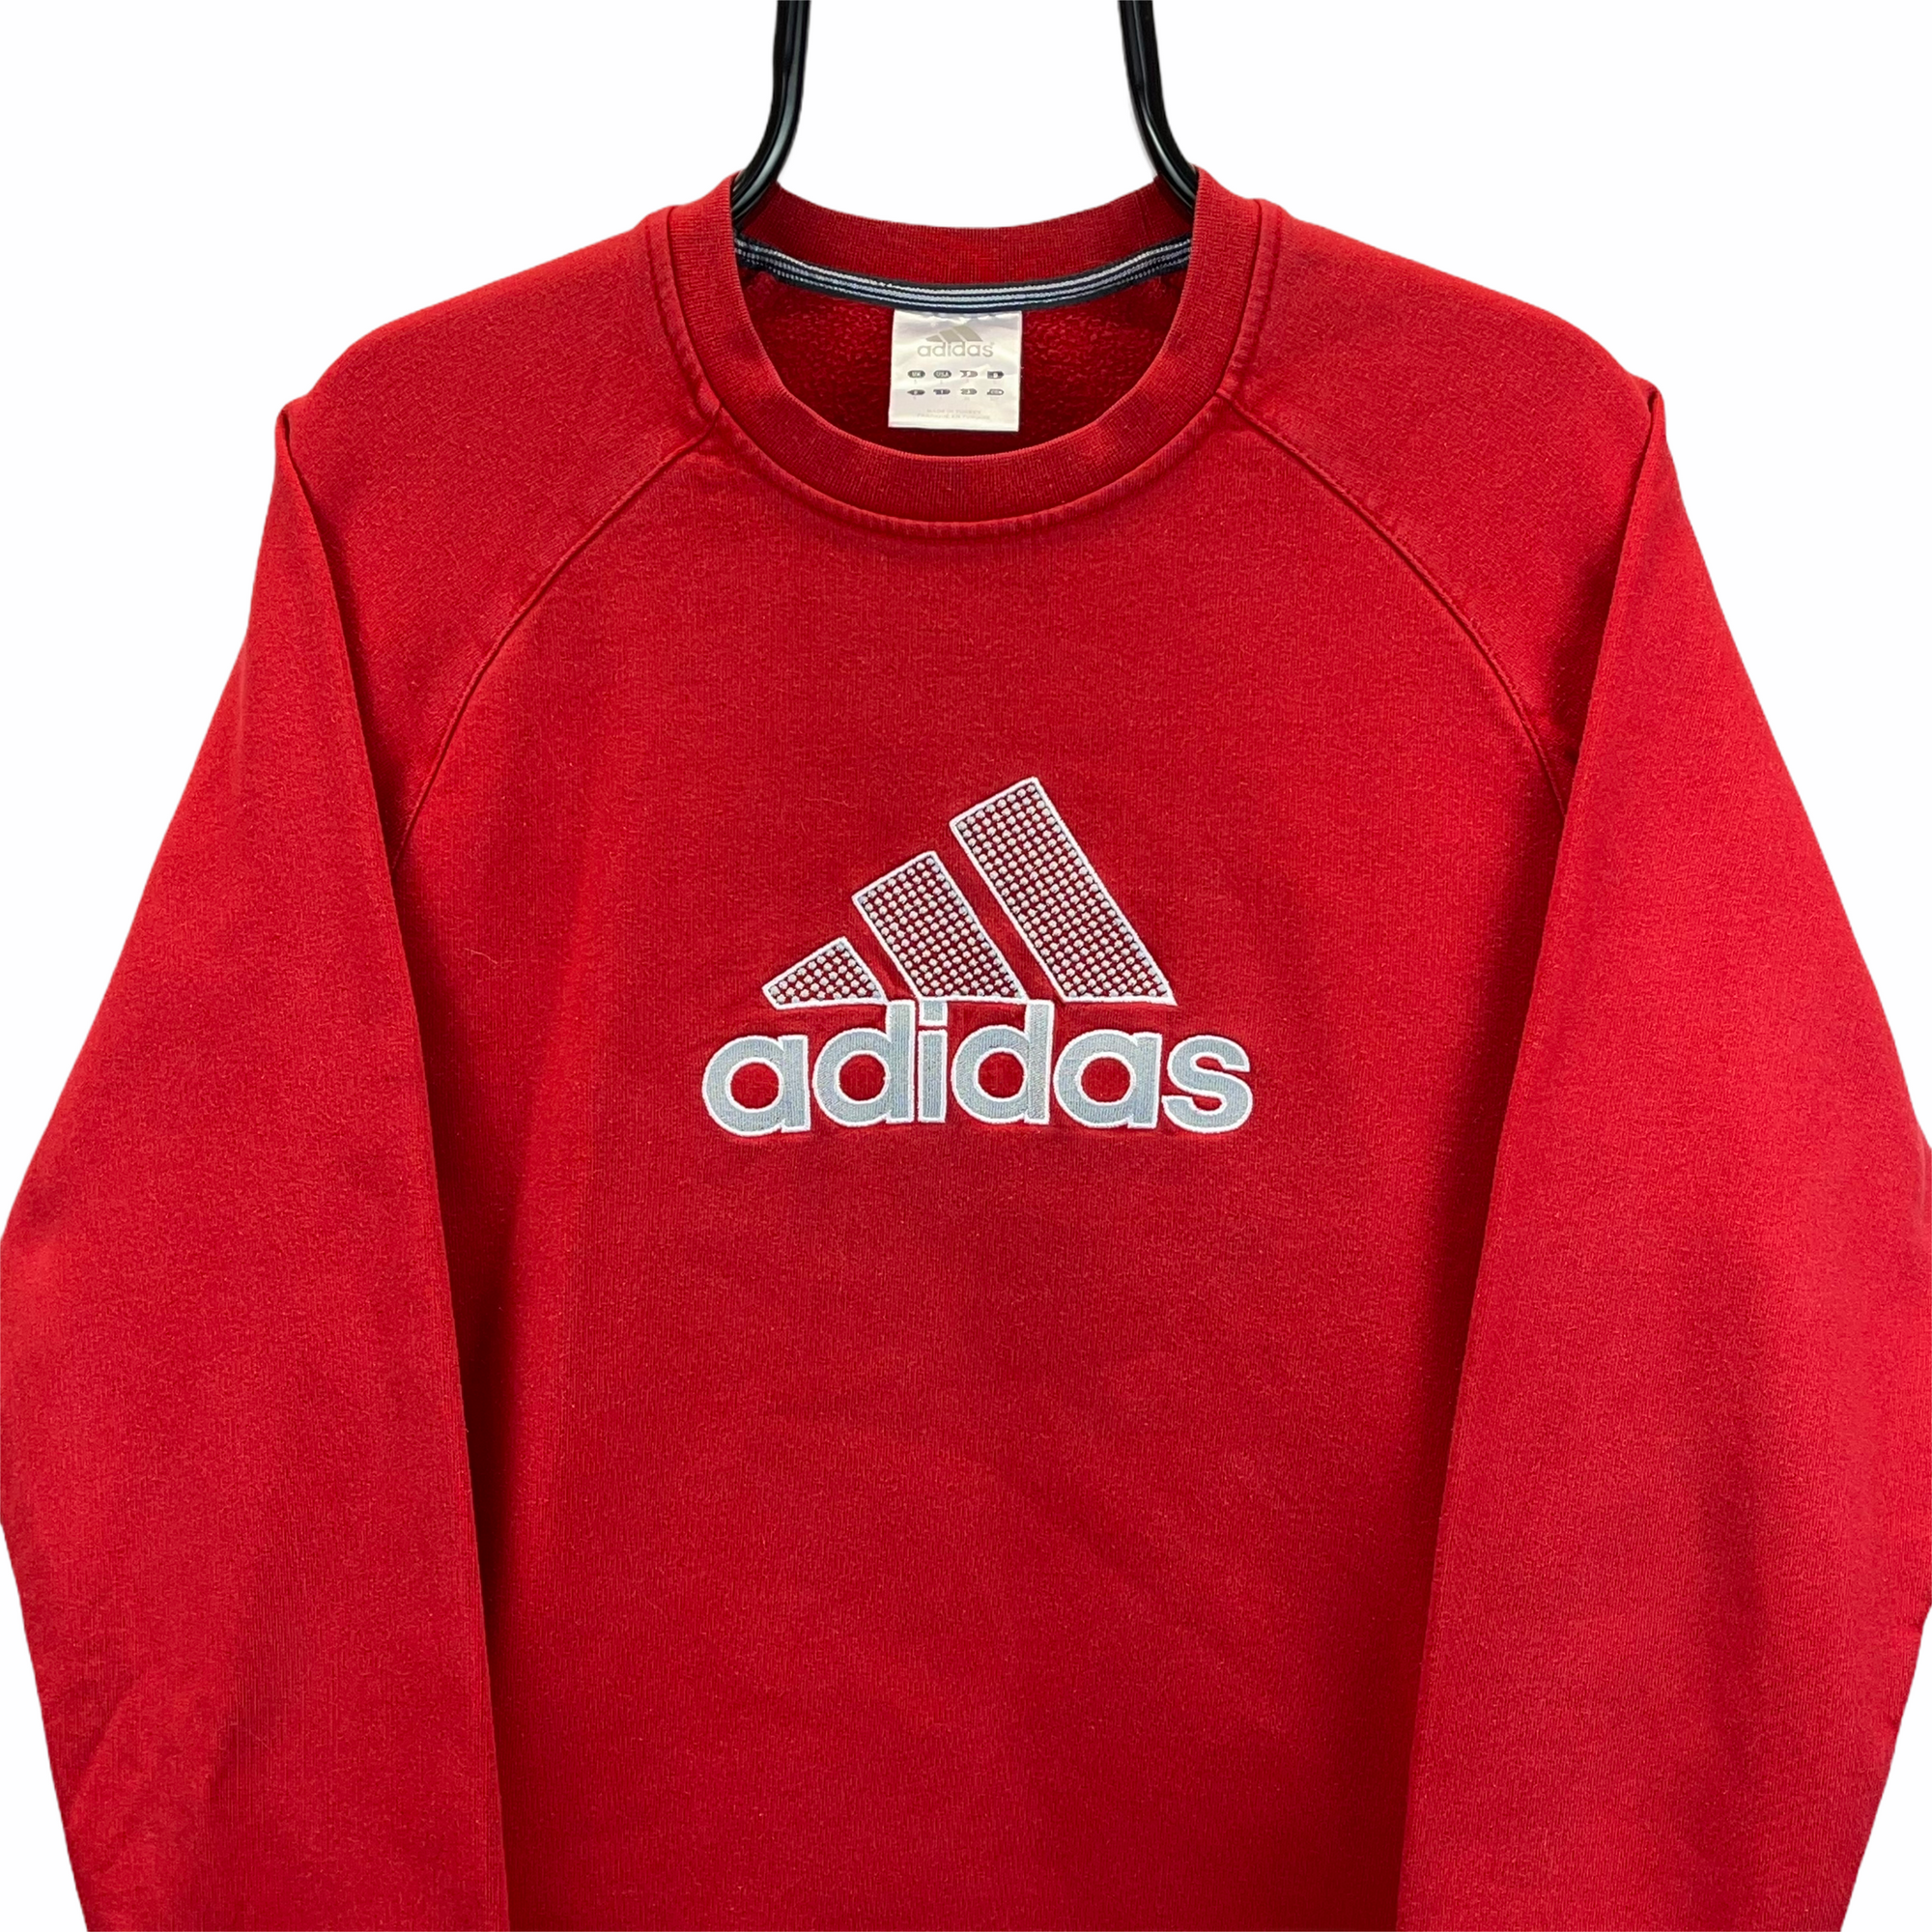 Vintage Adidas Spellout Sweatshirt in Red - Men's Small/Women's Medium